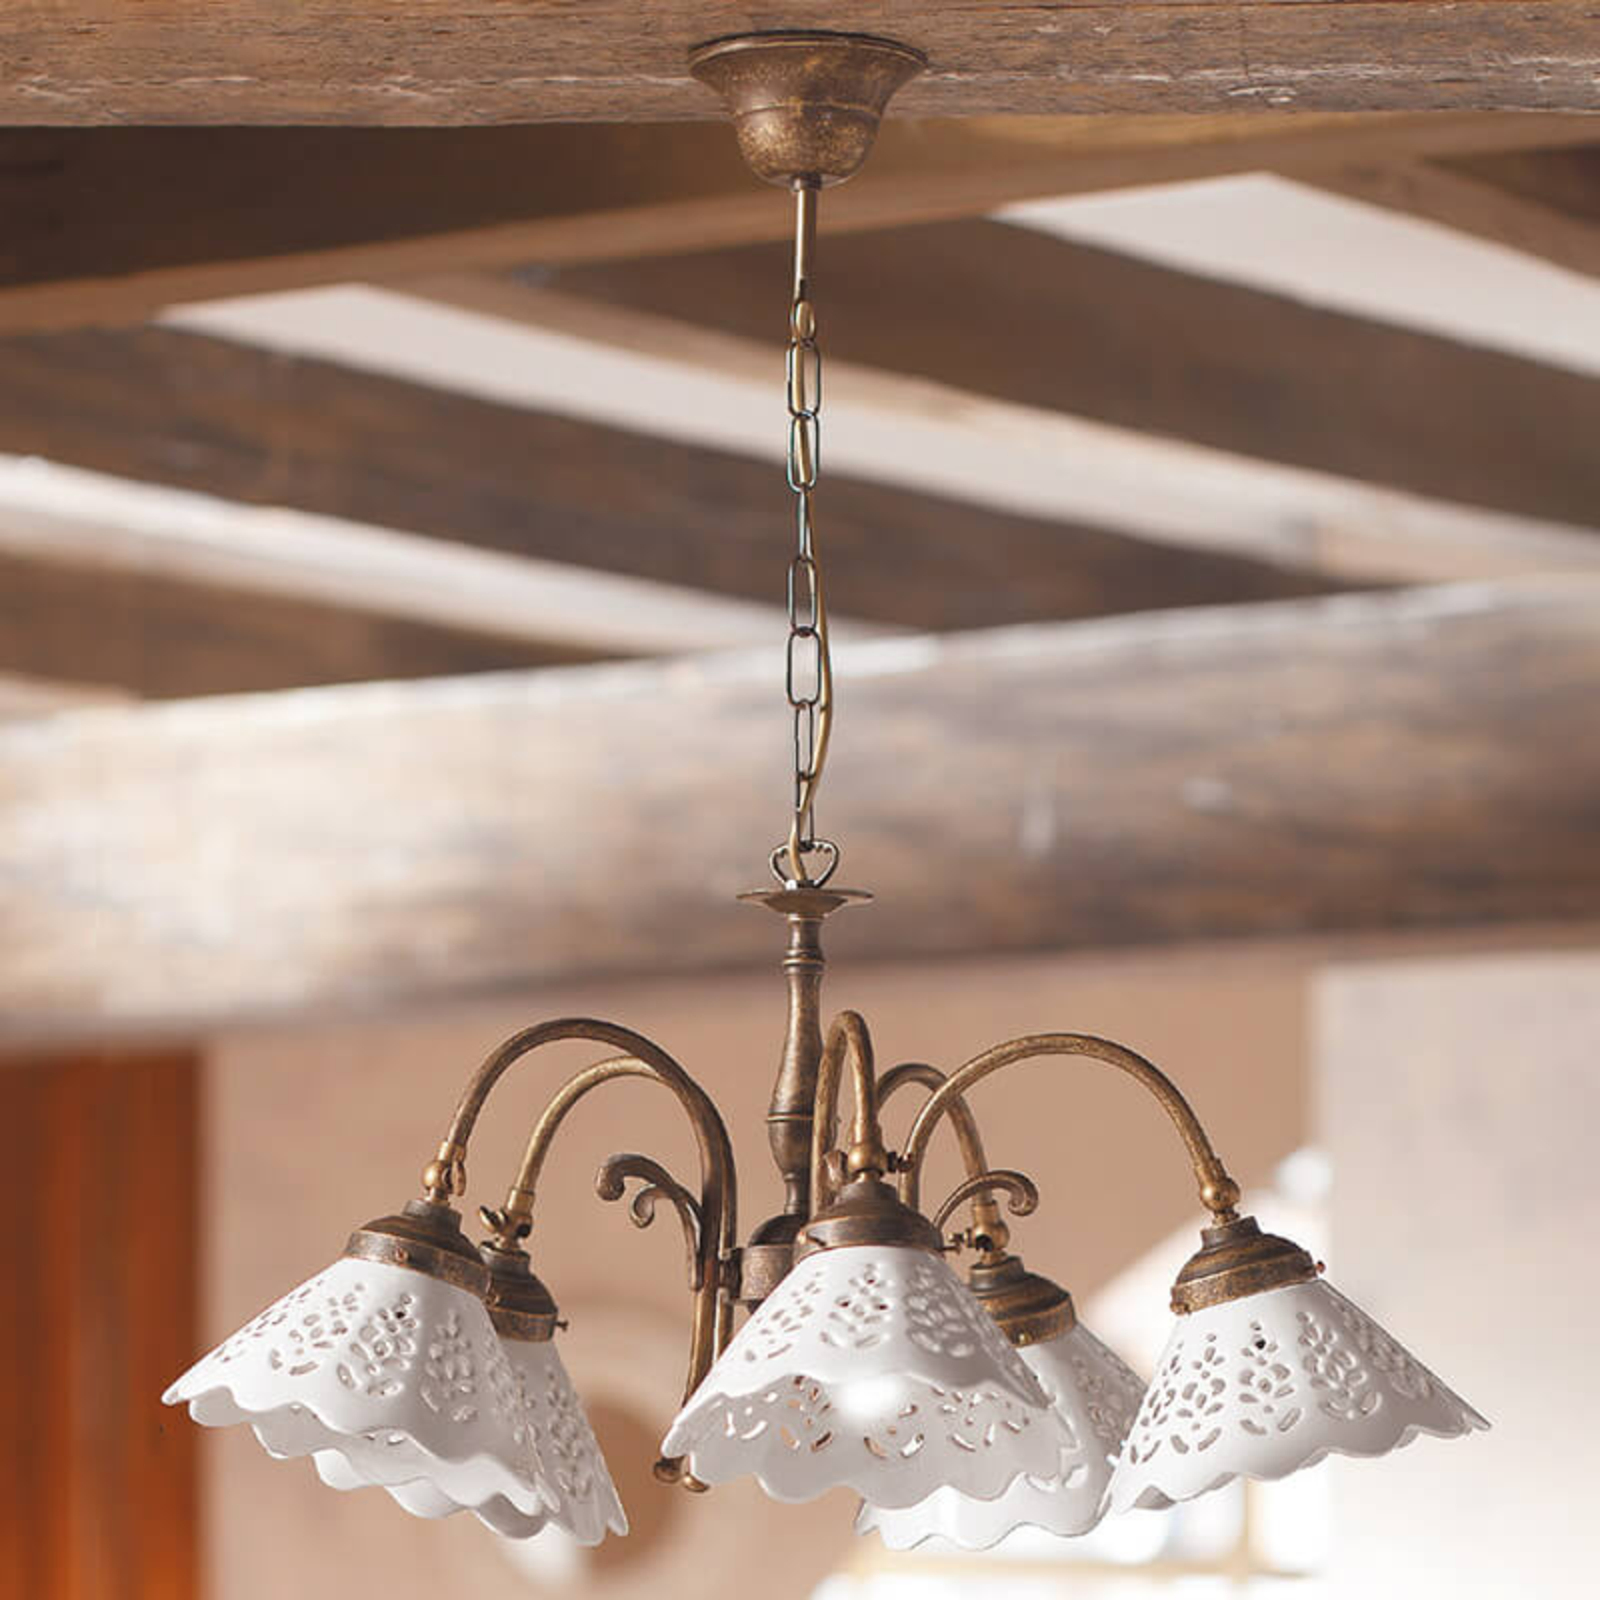 Semino hanging light, ceramic lampshades, 5-bulb